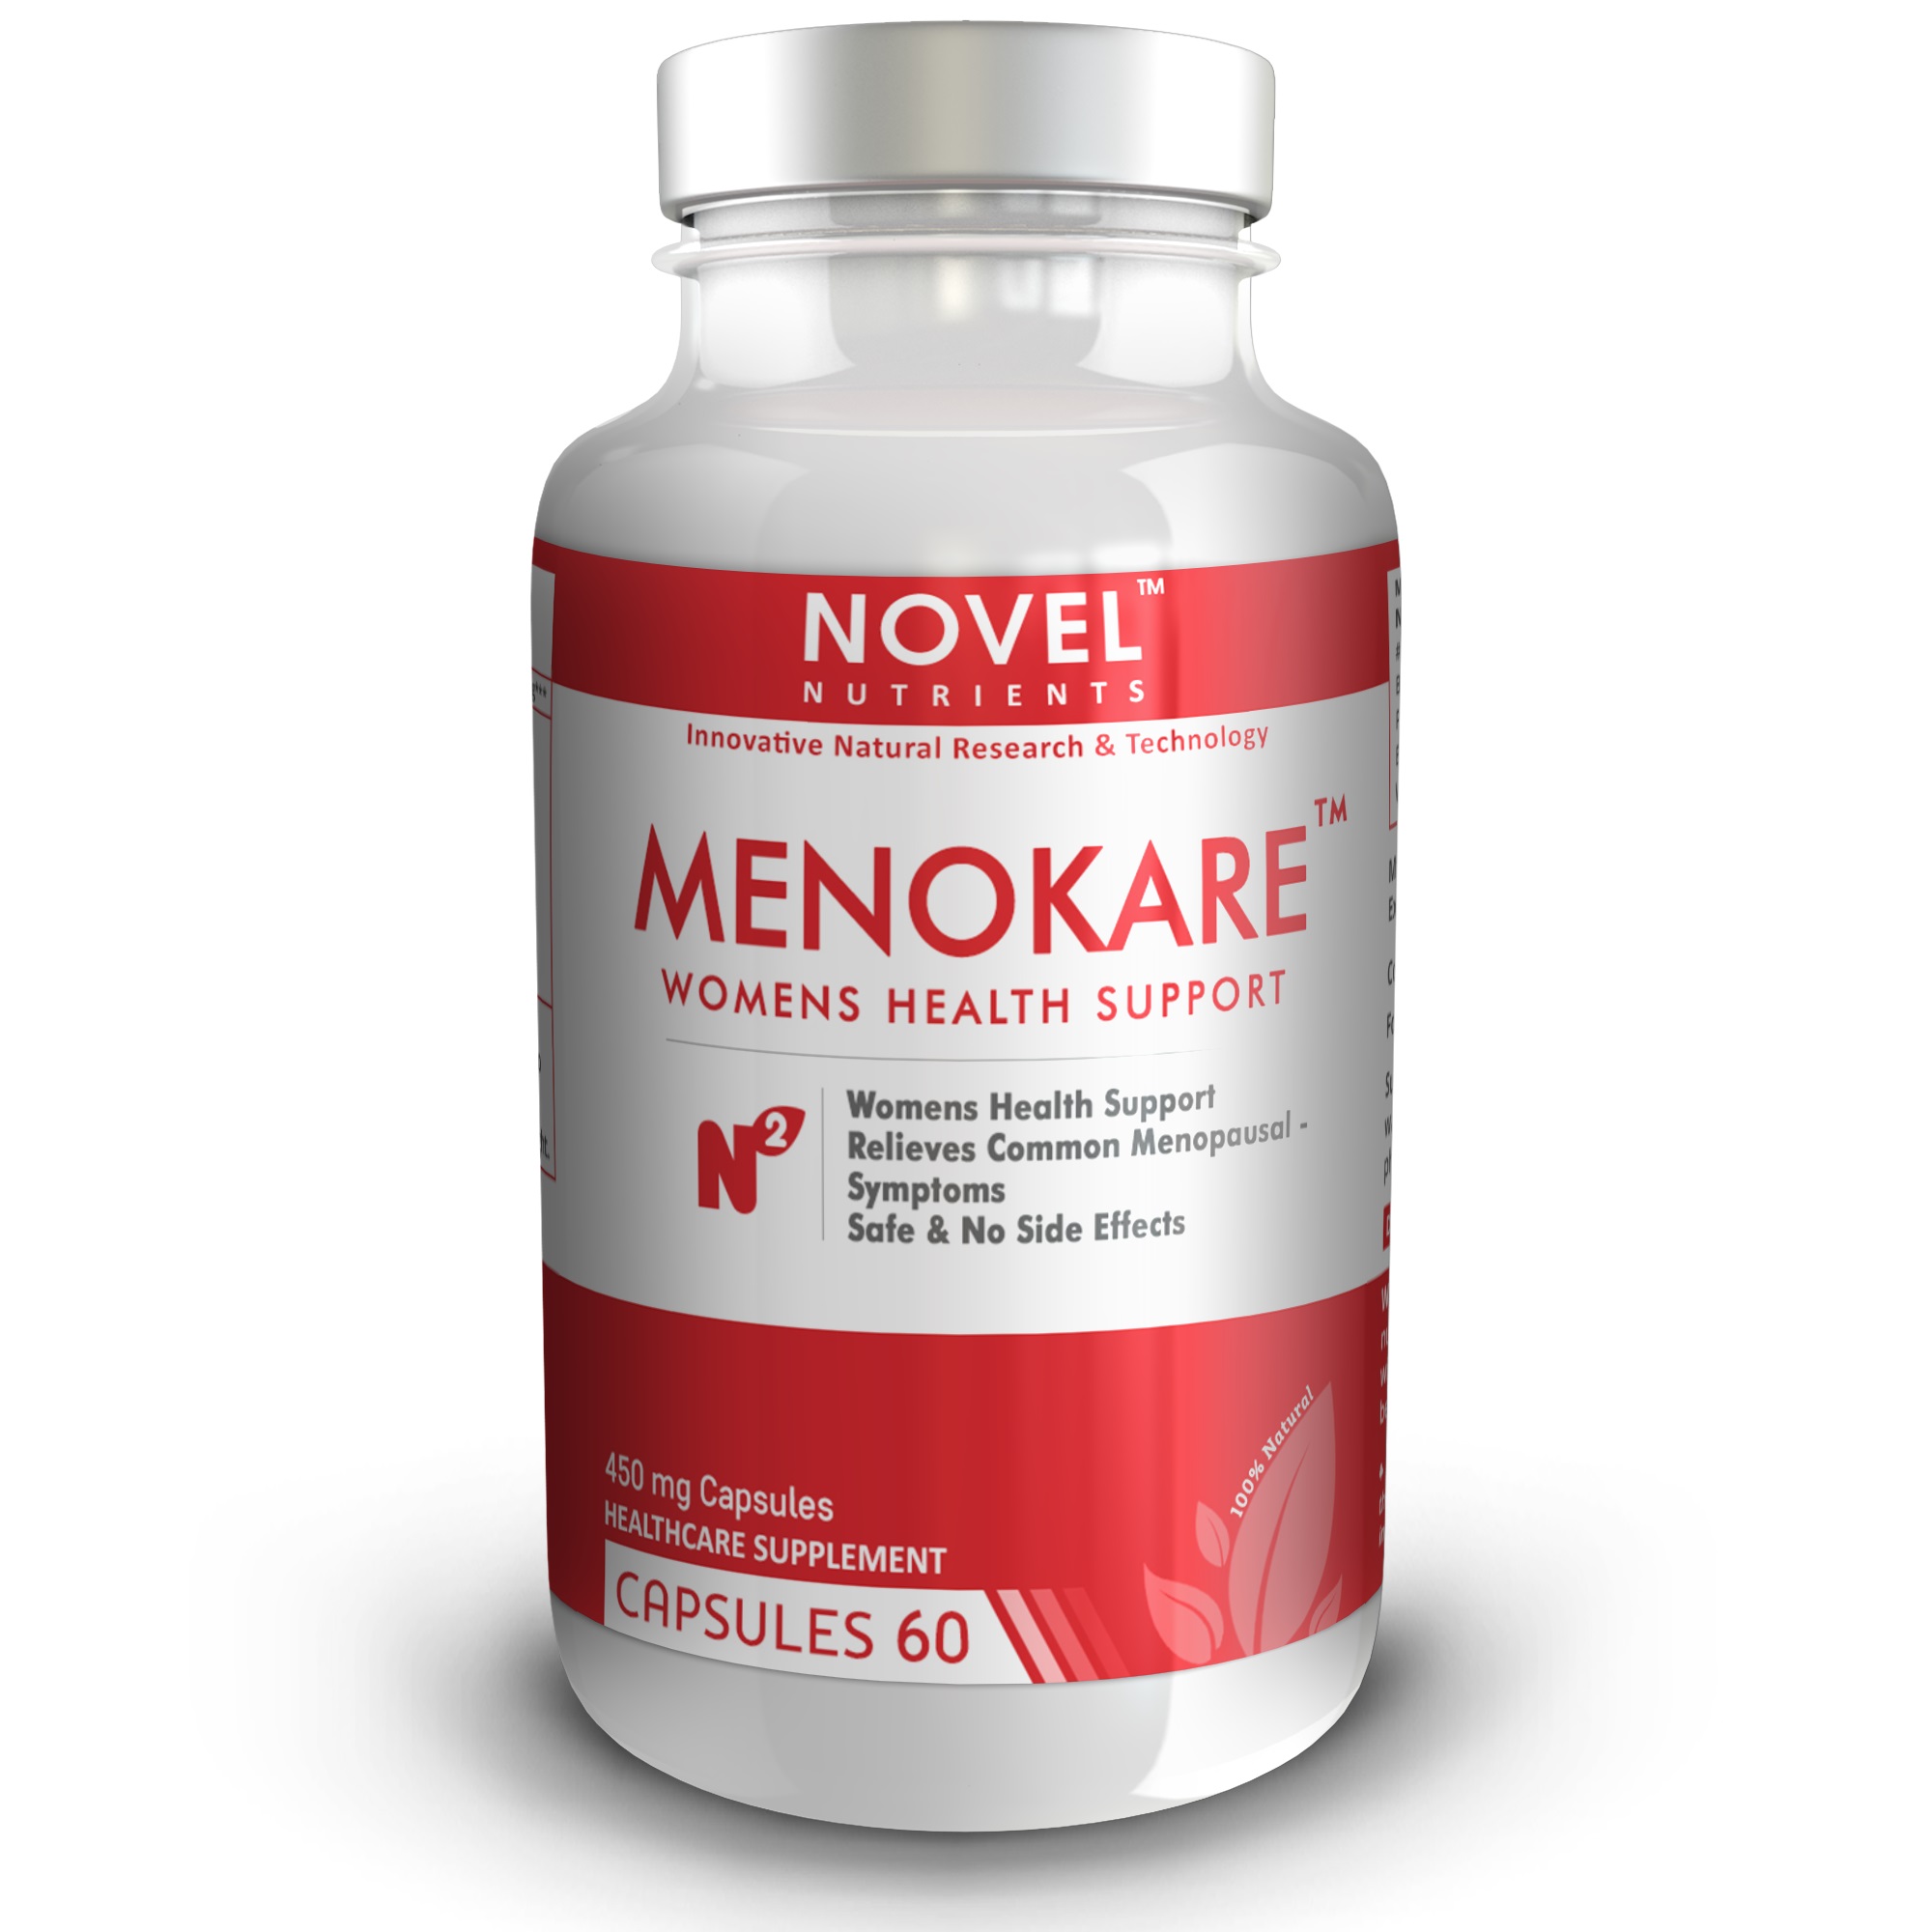 Menokare - TM 450 mg Capsules Womens Health Support